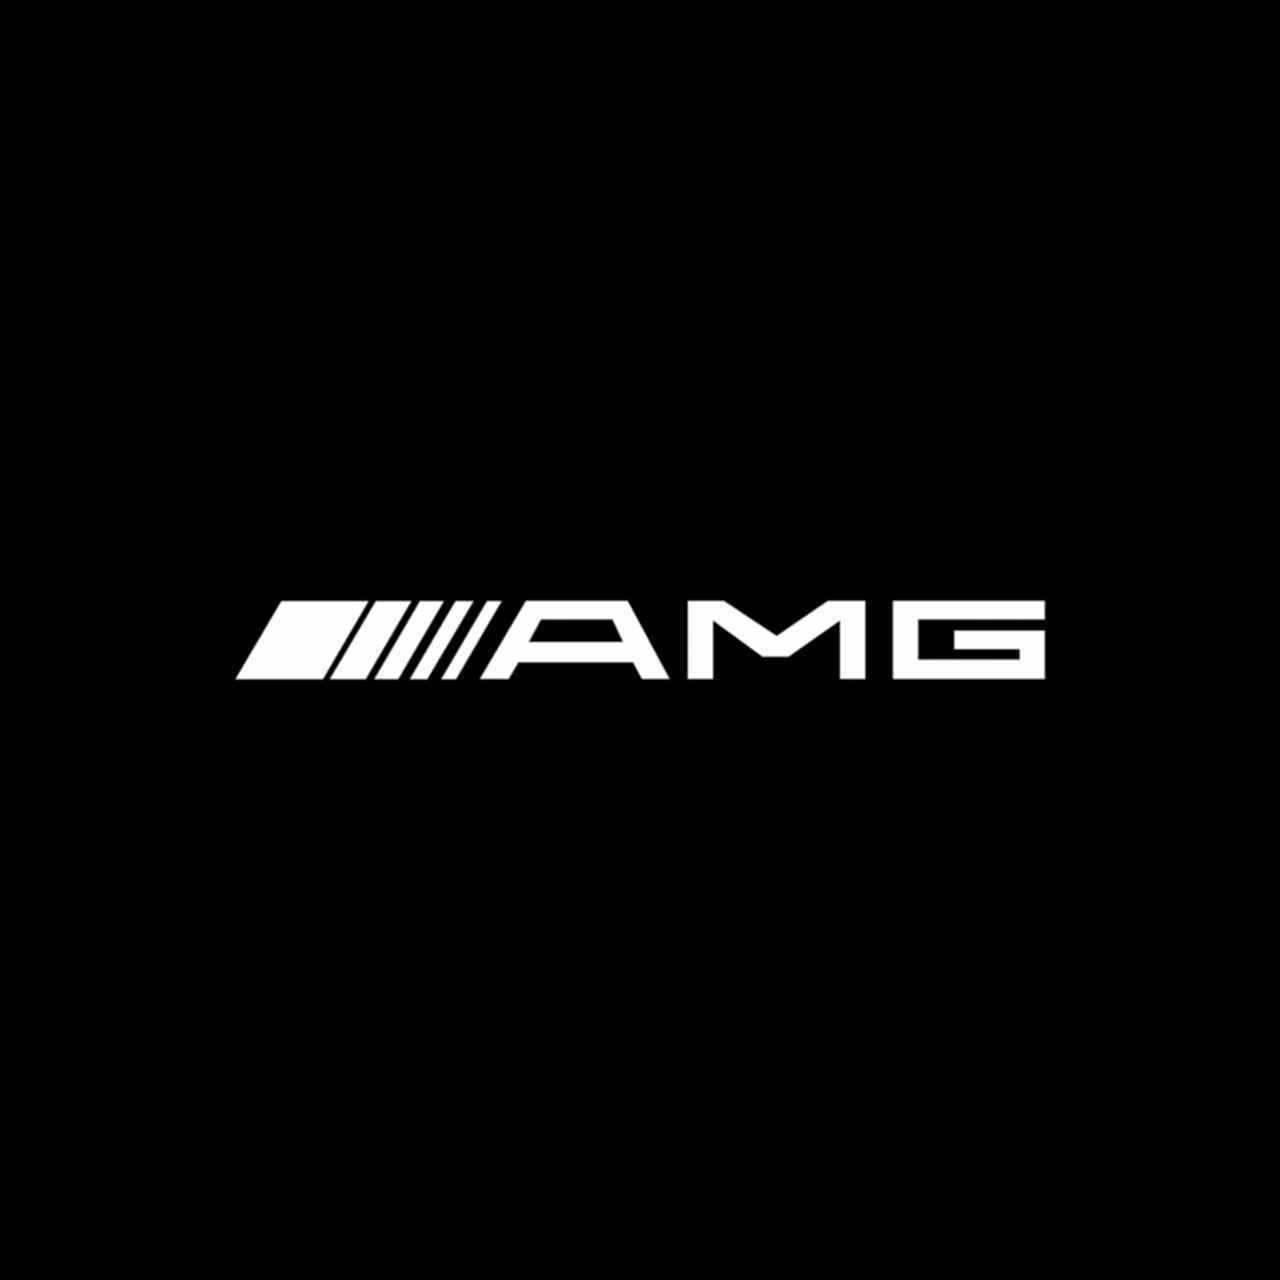 AMG LOGO  Amg logo, Amg, Mercedes benz amg